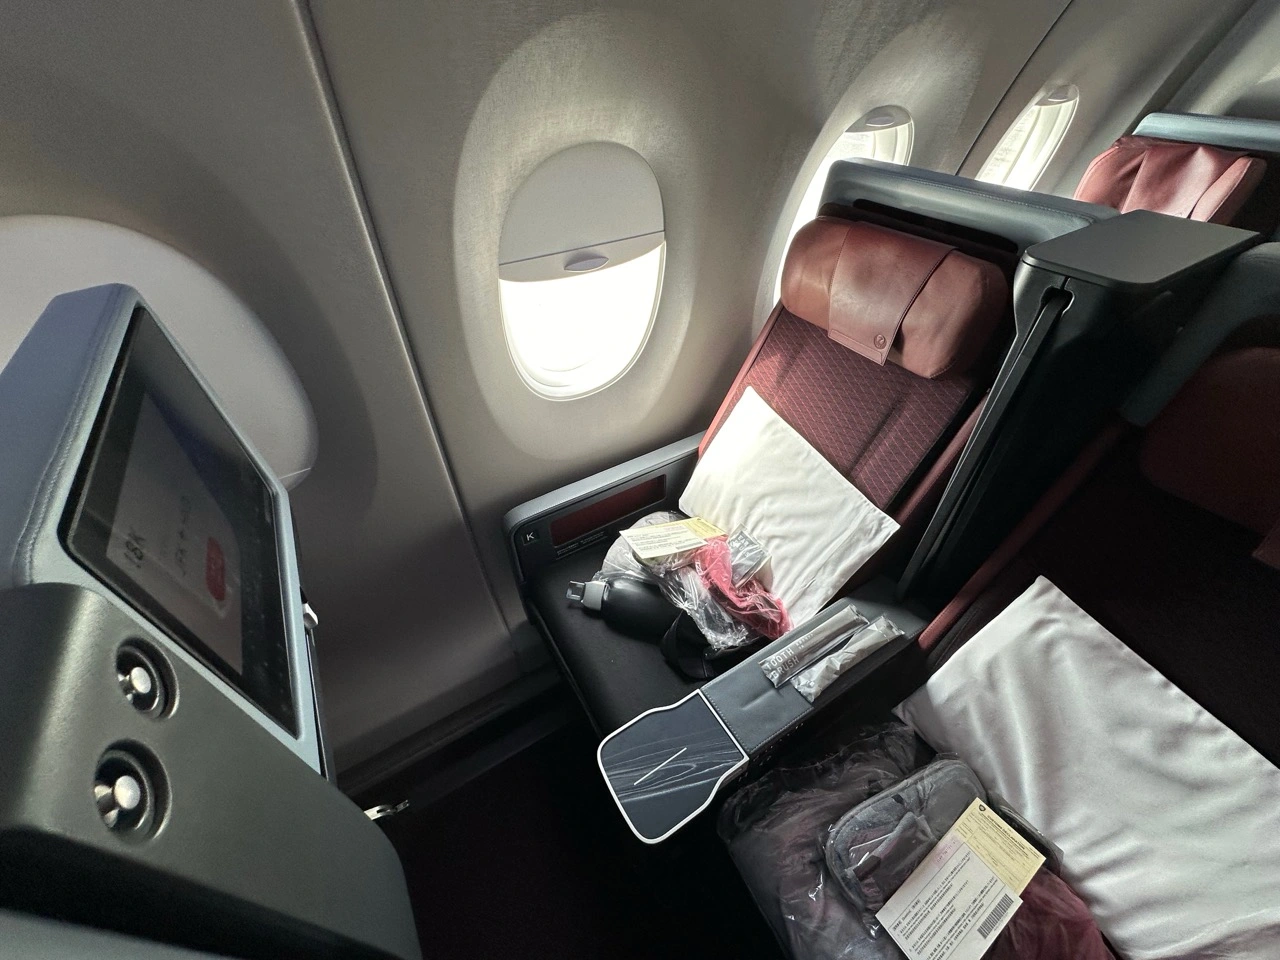 JAL Flagship A350-1000 Premium Economy Review